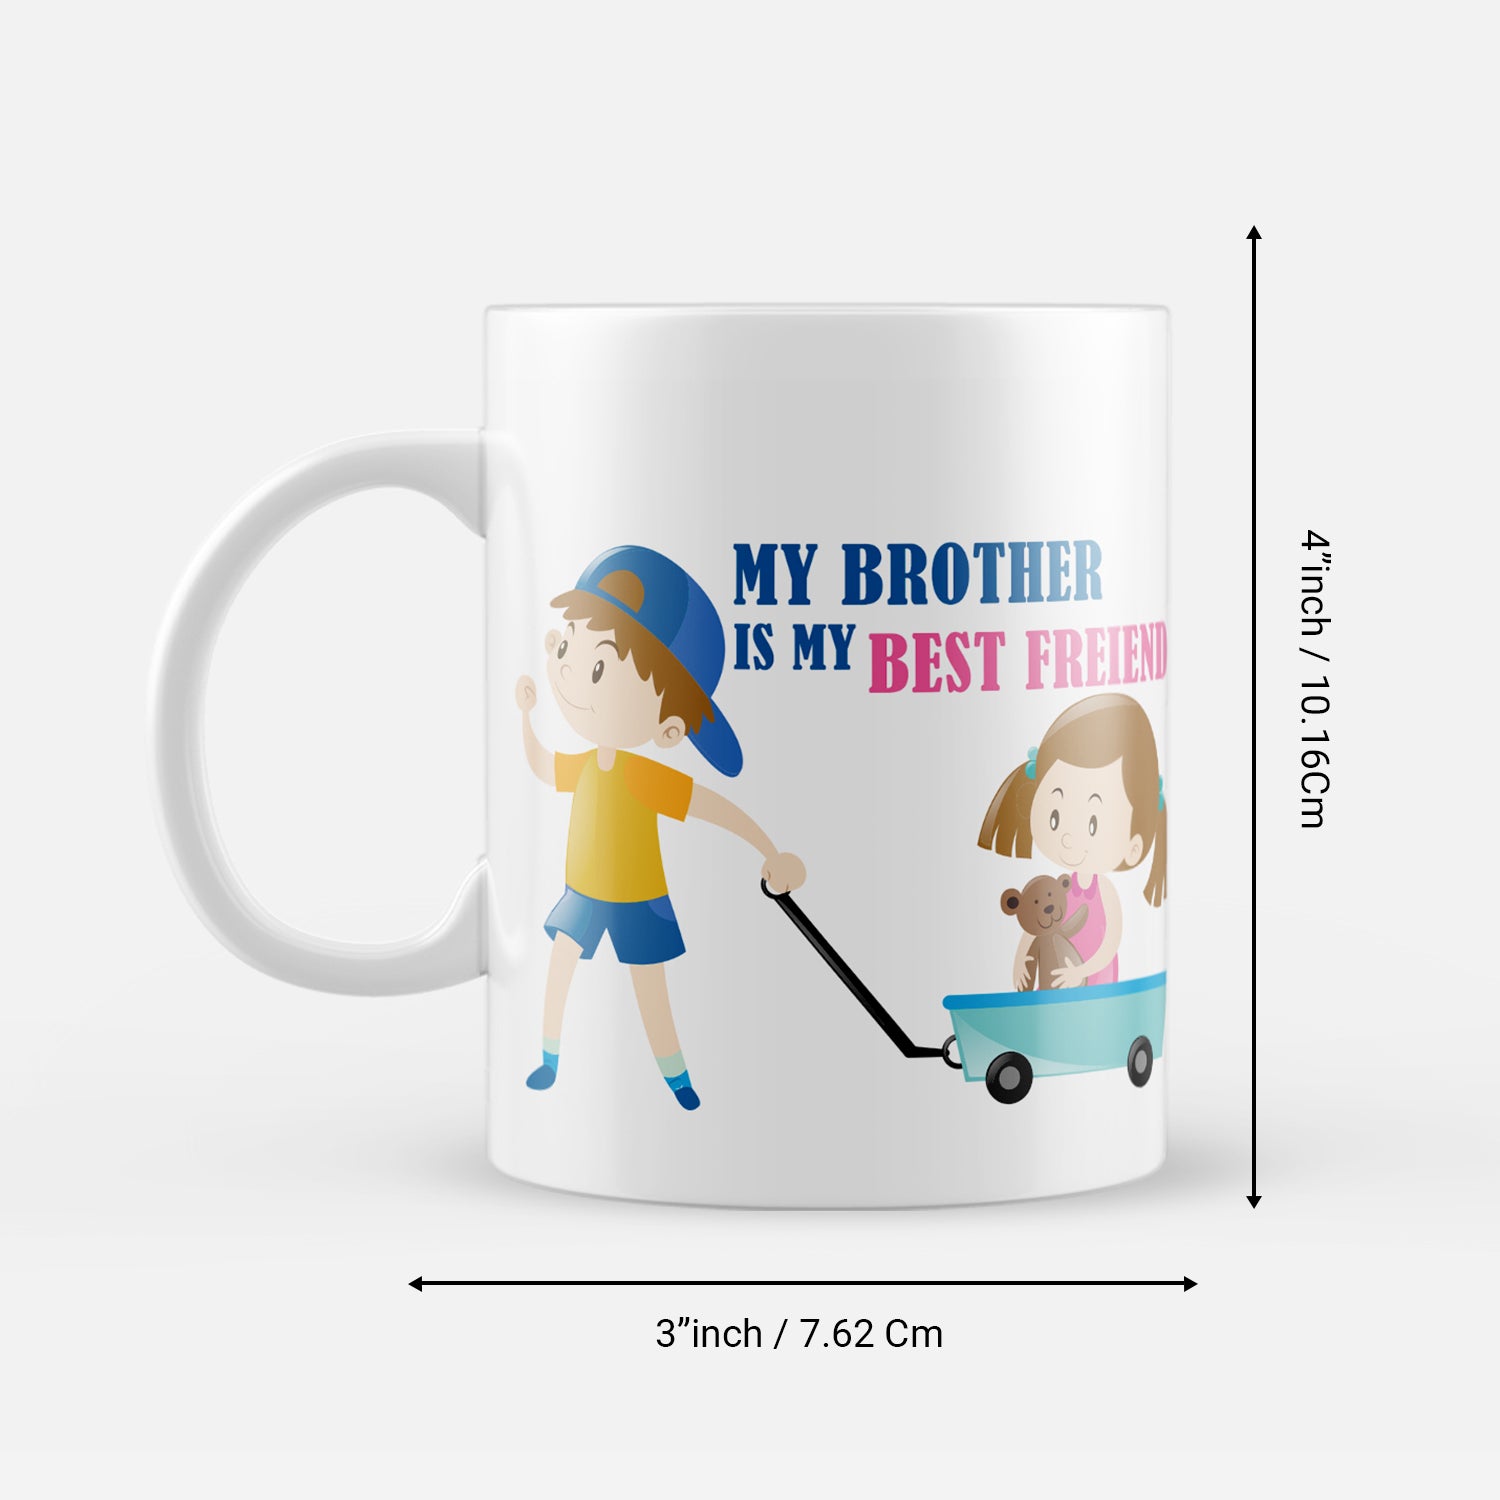 "My brother is my best friend" Brother Ceramic Coffee/Tea Mug 3